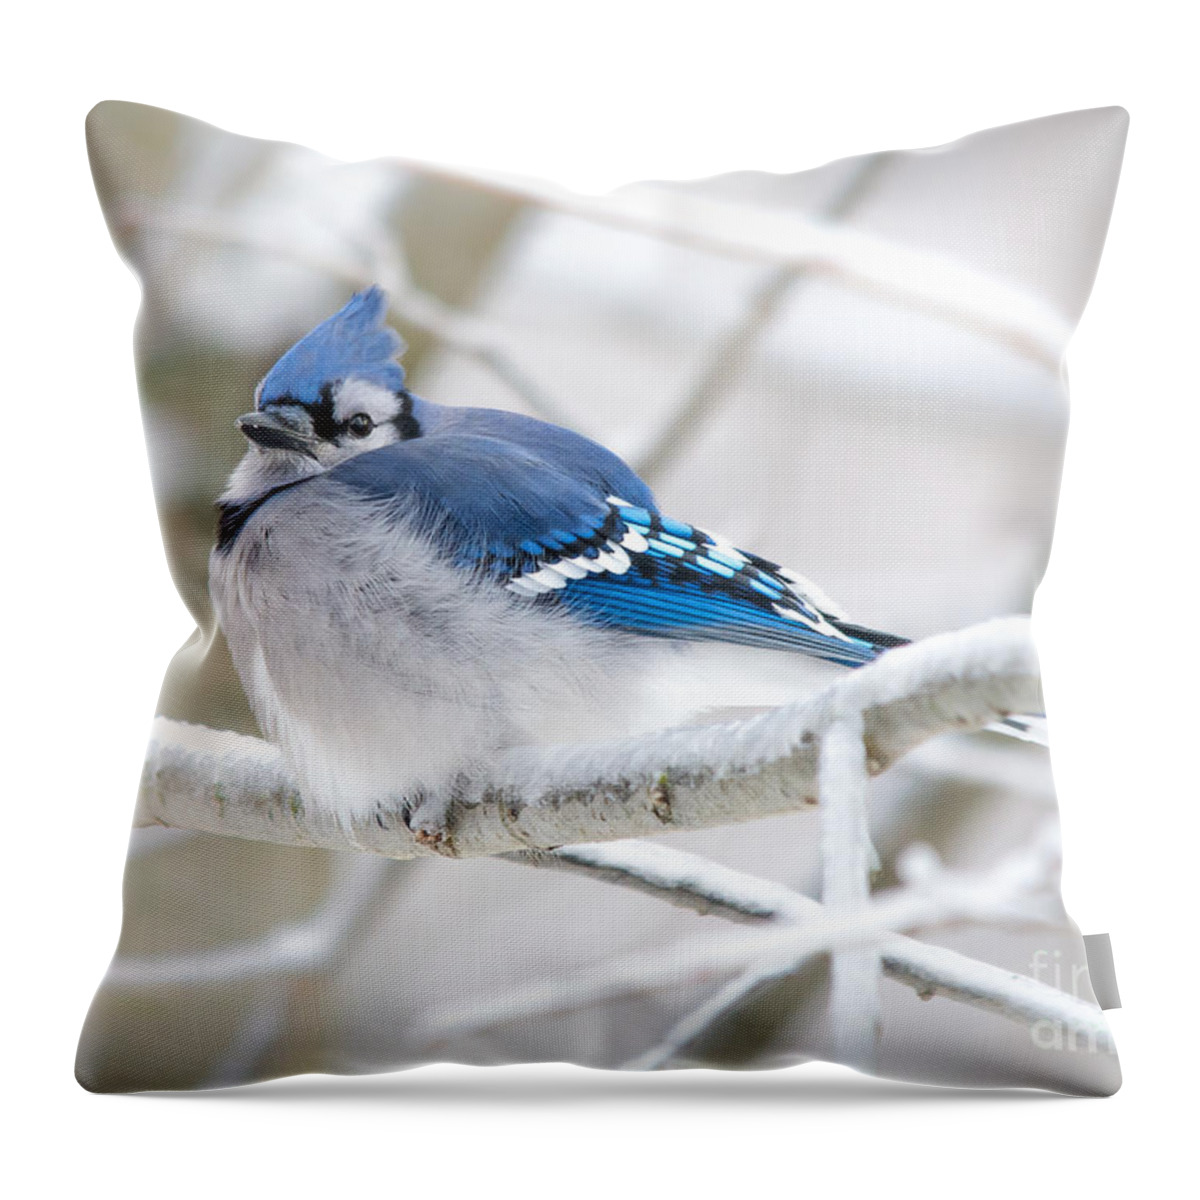 Bokeh Throw Pillow featuring the photograph Puffy Blue by Cheryl Baxter